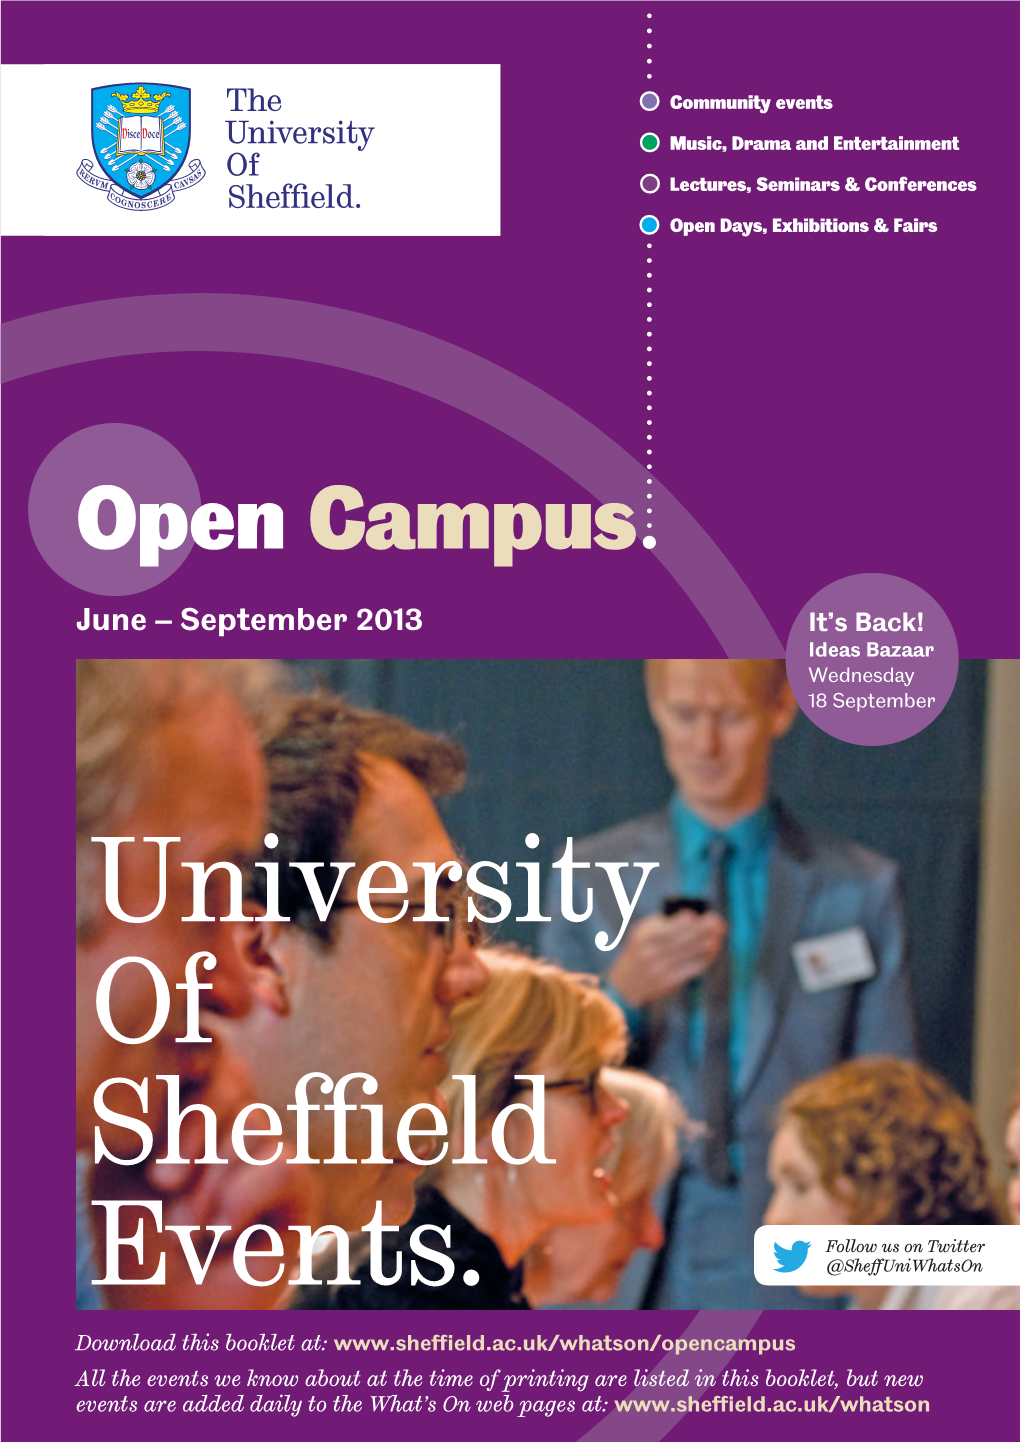 University of Sheffield Events